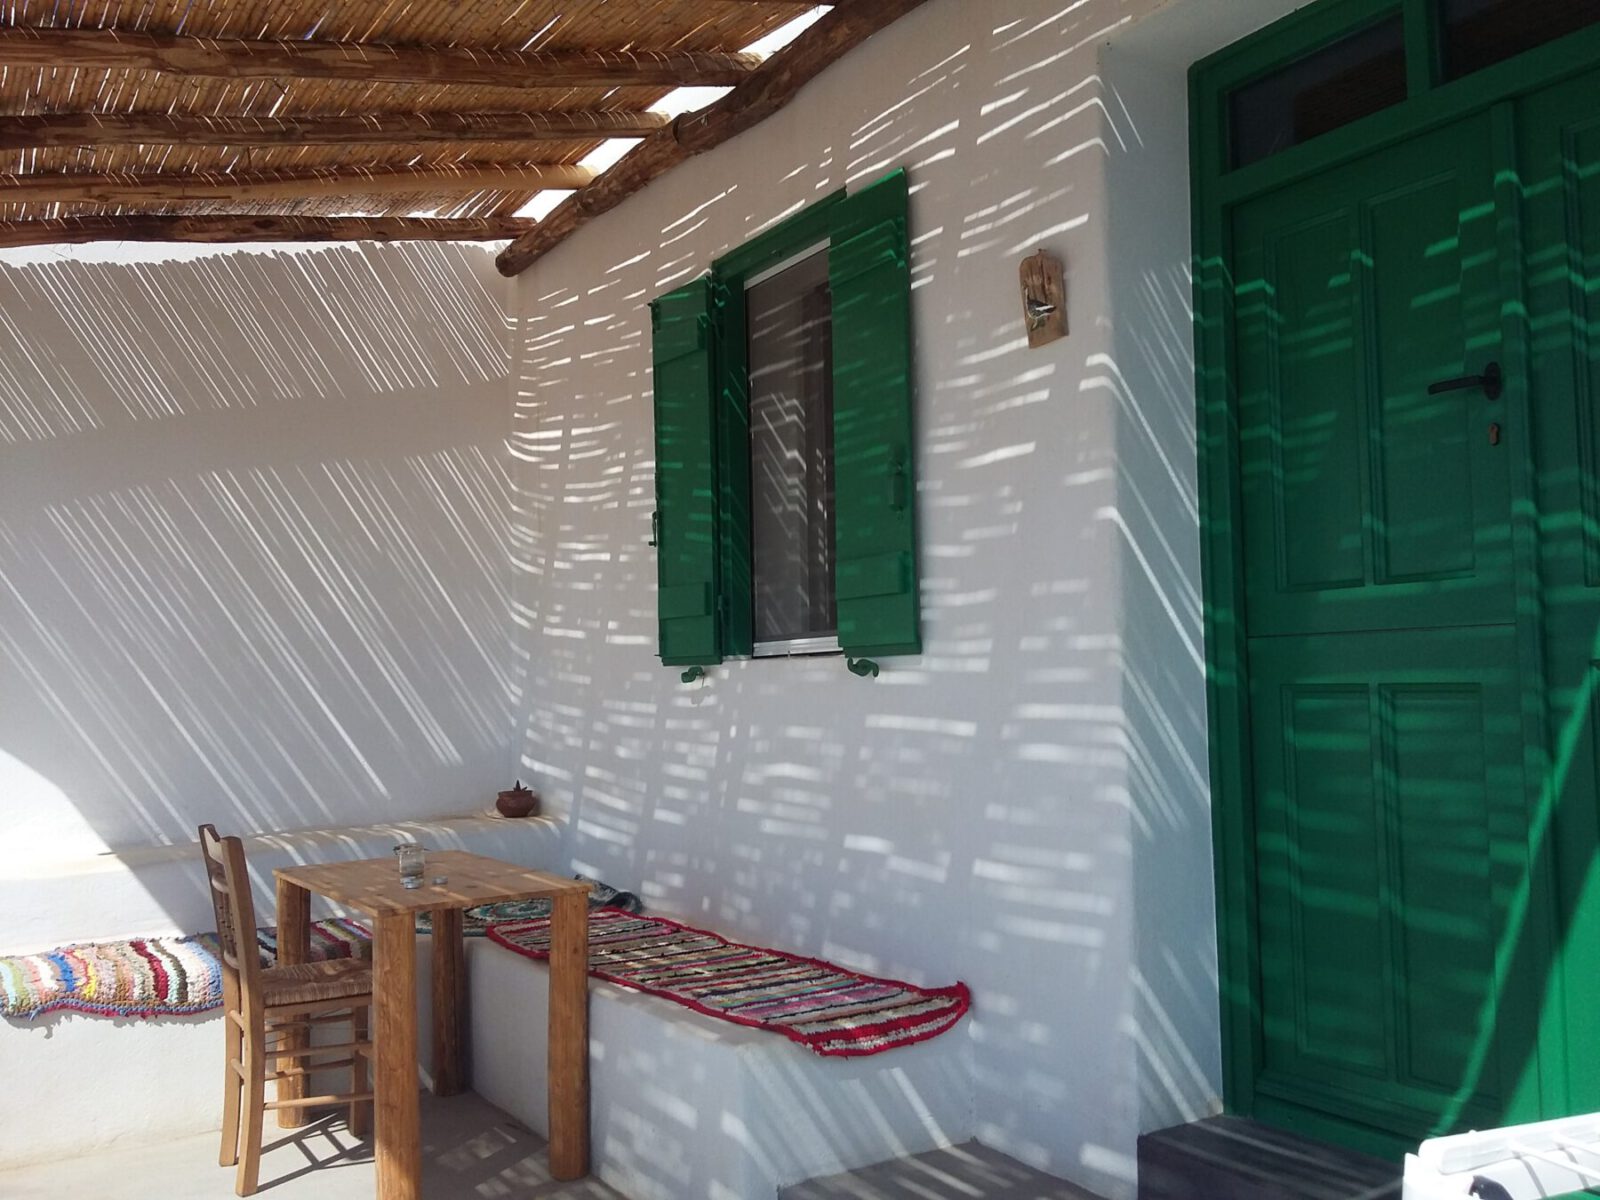 Archisearch ARGALIOS Guesthouse in Stavros, Donousa, Cyclades archipelago | Anka Arvanitidi - ECUALab